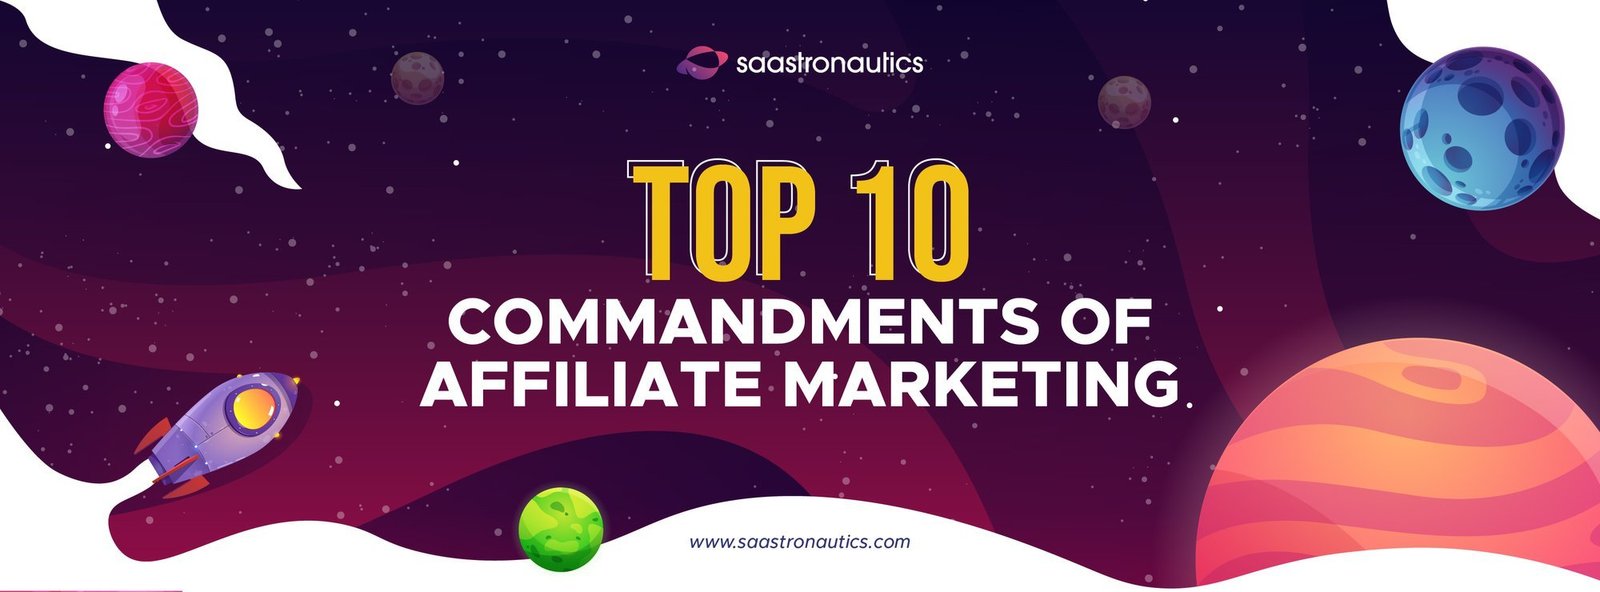 Top 10 Commandments of Affiliate Marketing